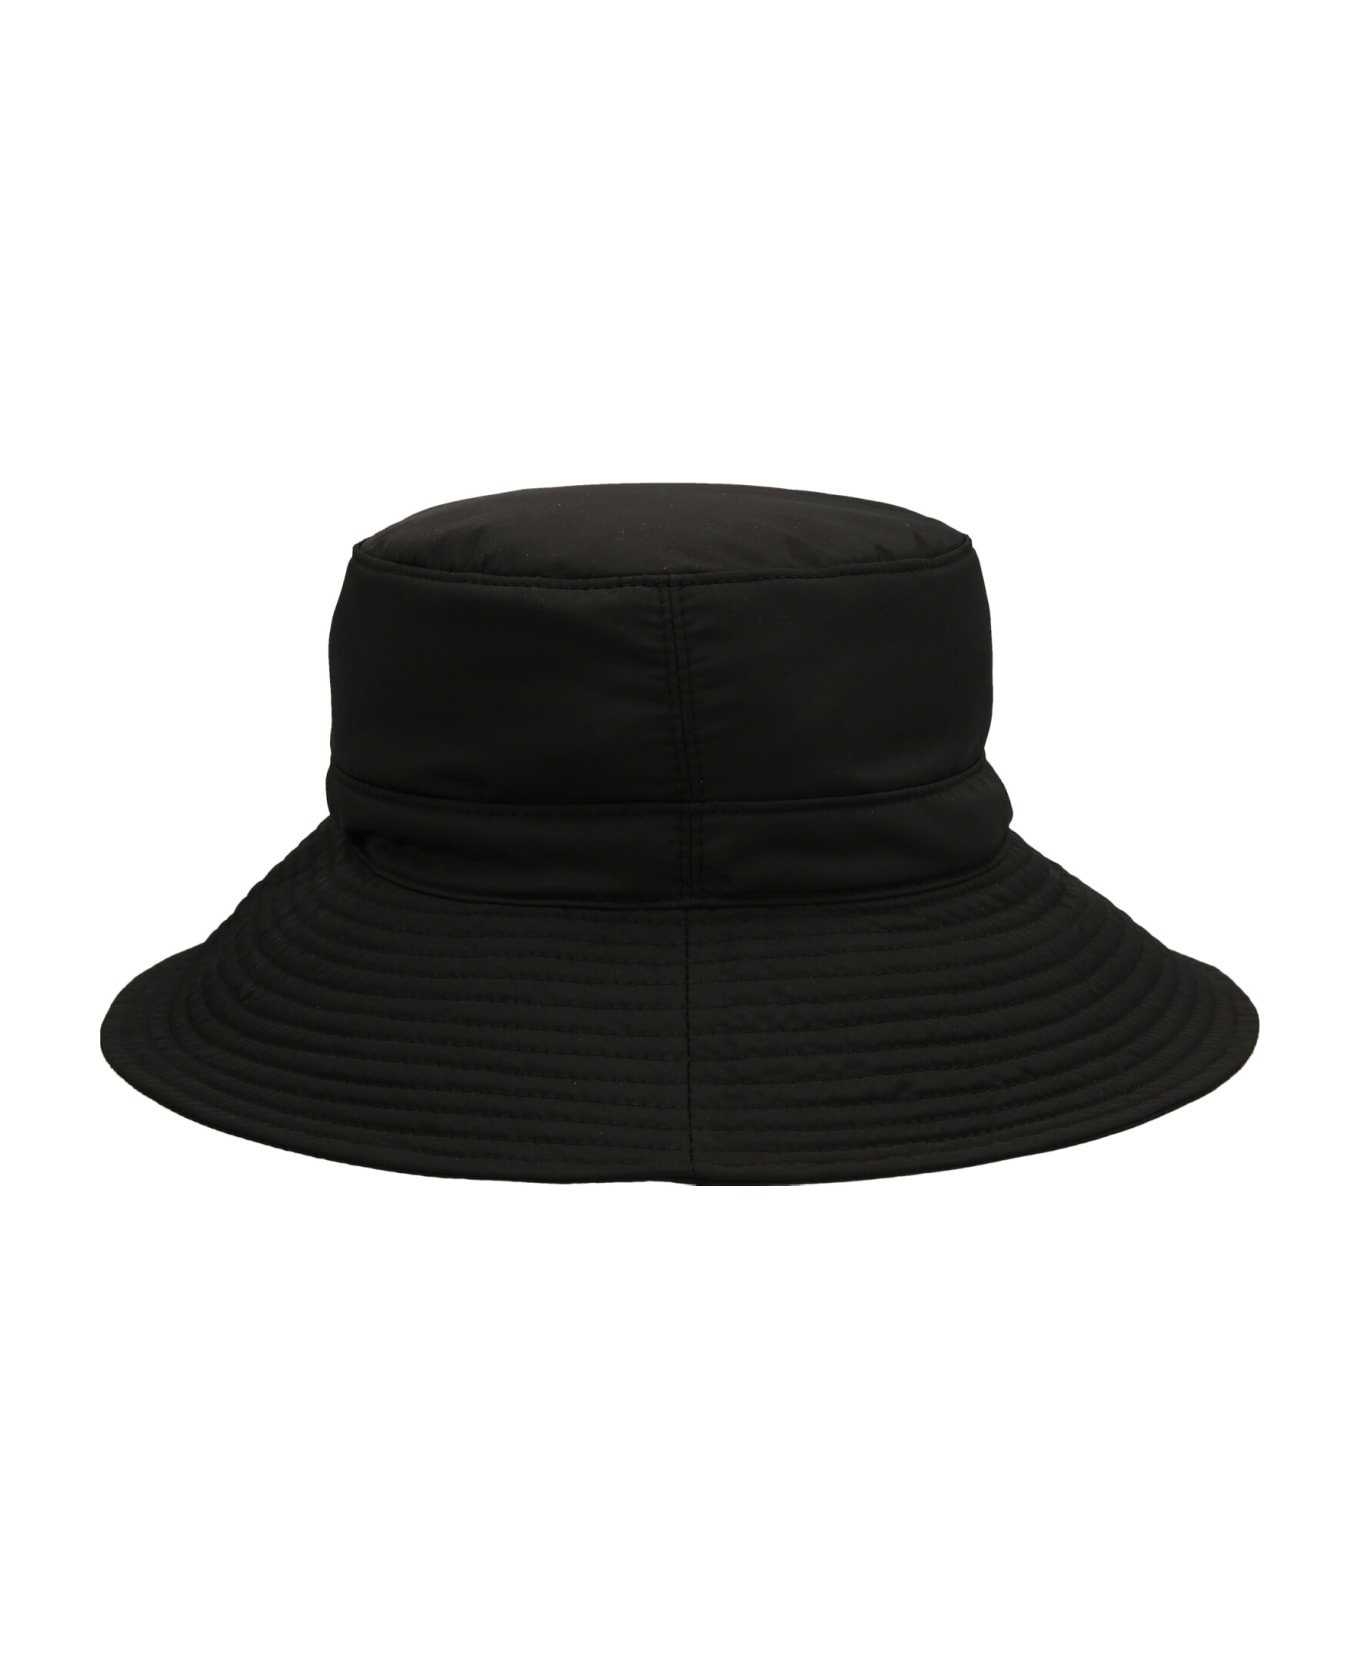 Ganni Logo Bucket Hat - Black  